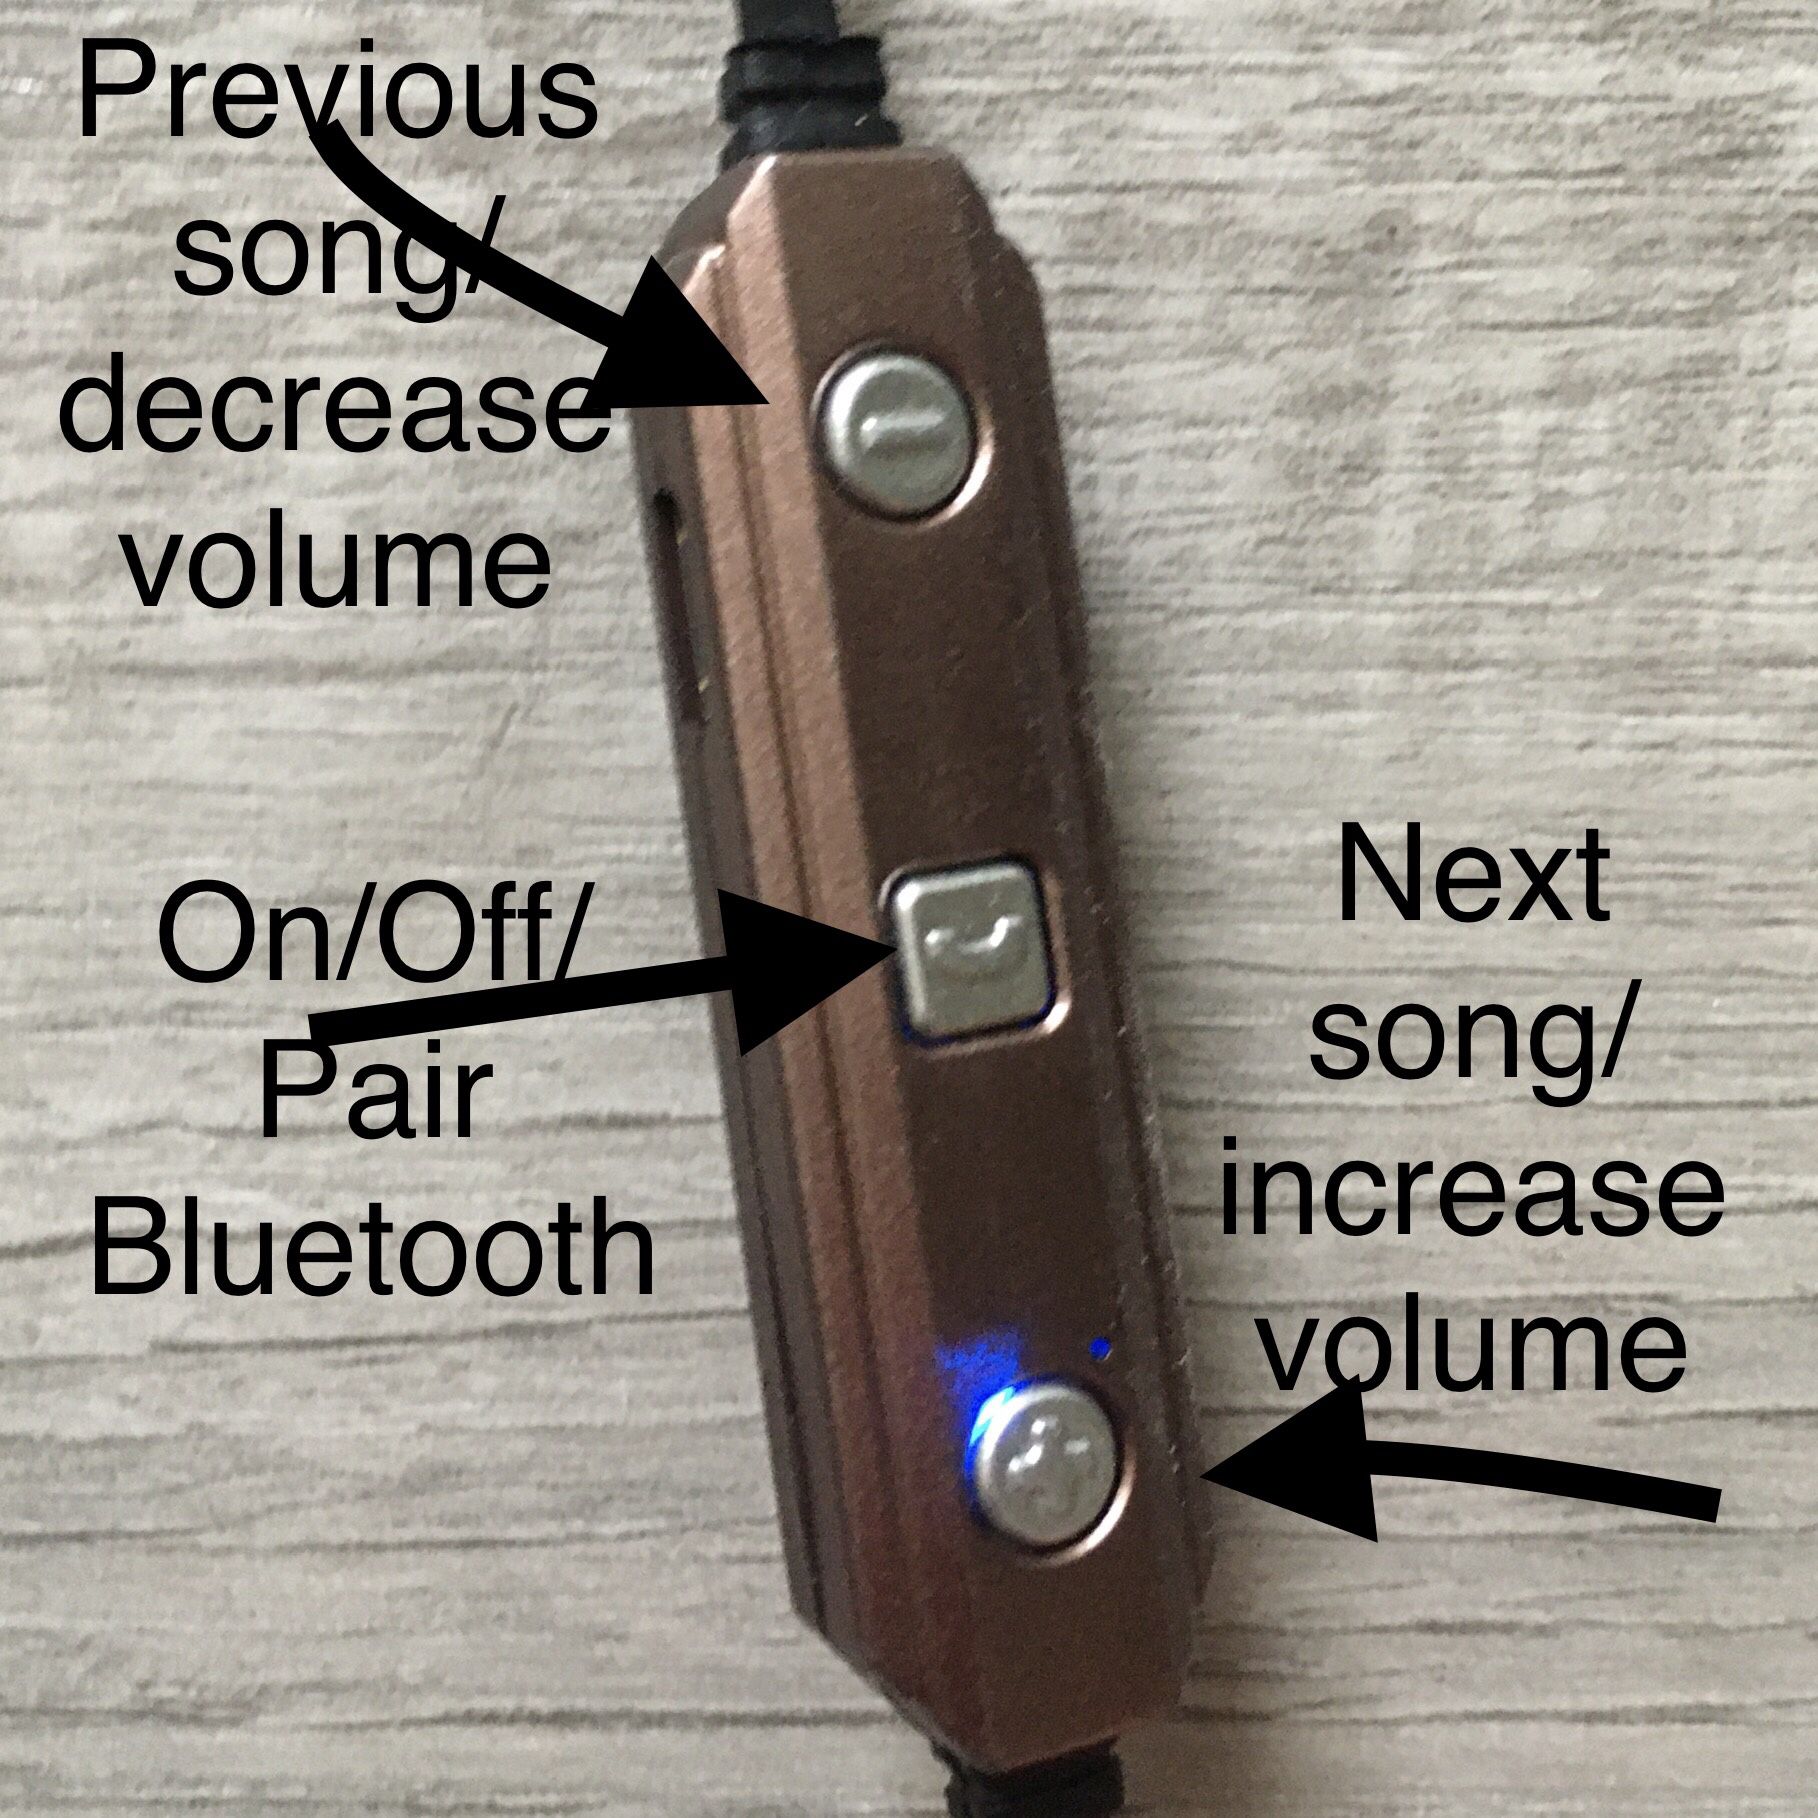 Barrel neckband wireless and Bluetooth Headphones! New